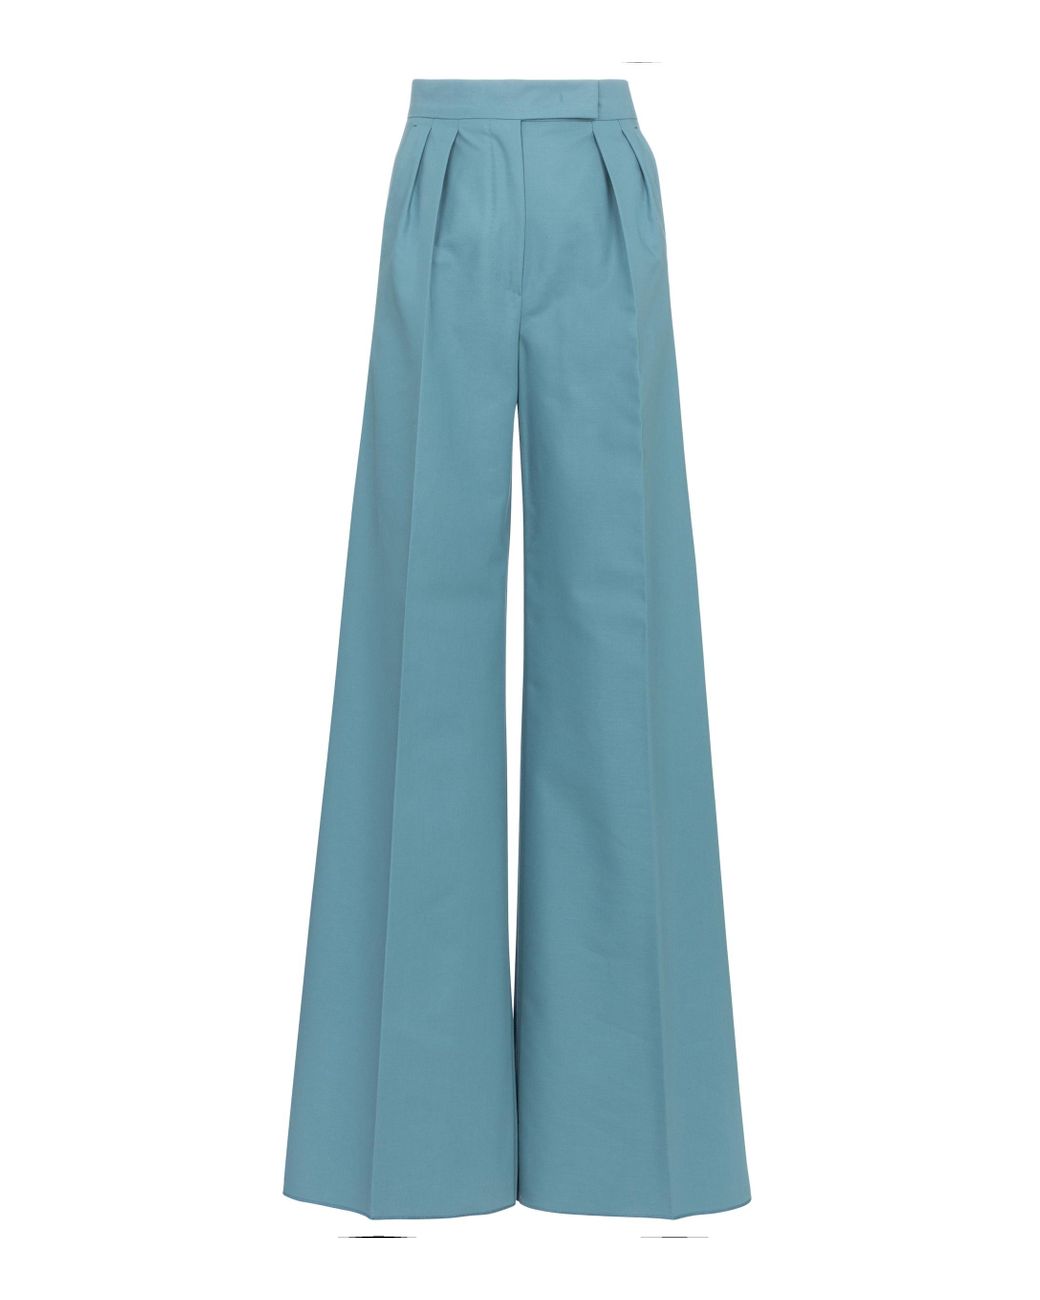 Max Mara Sabbia Cotton Gabardine Pants in Blue - Lyst